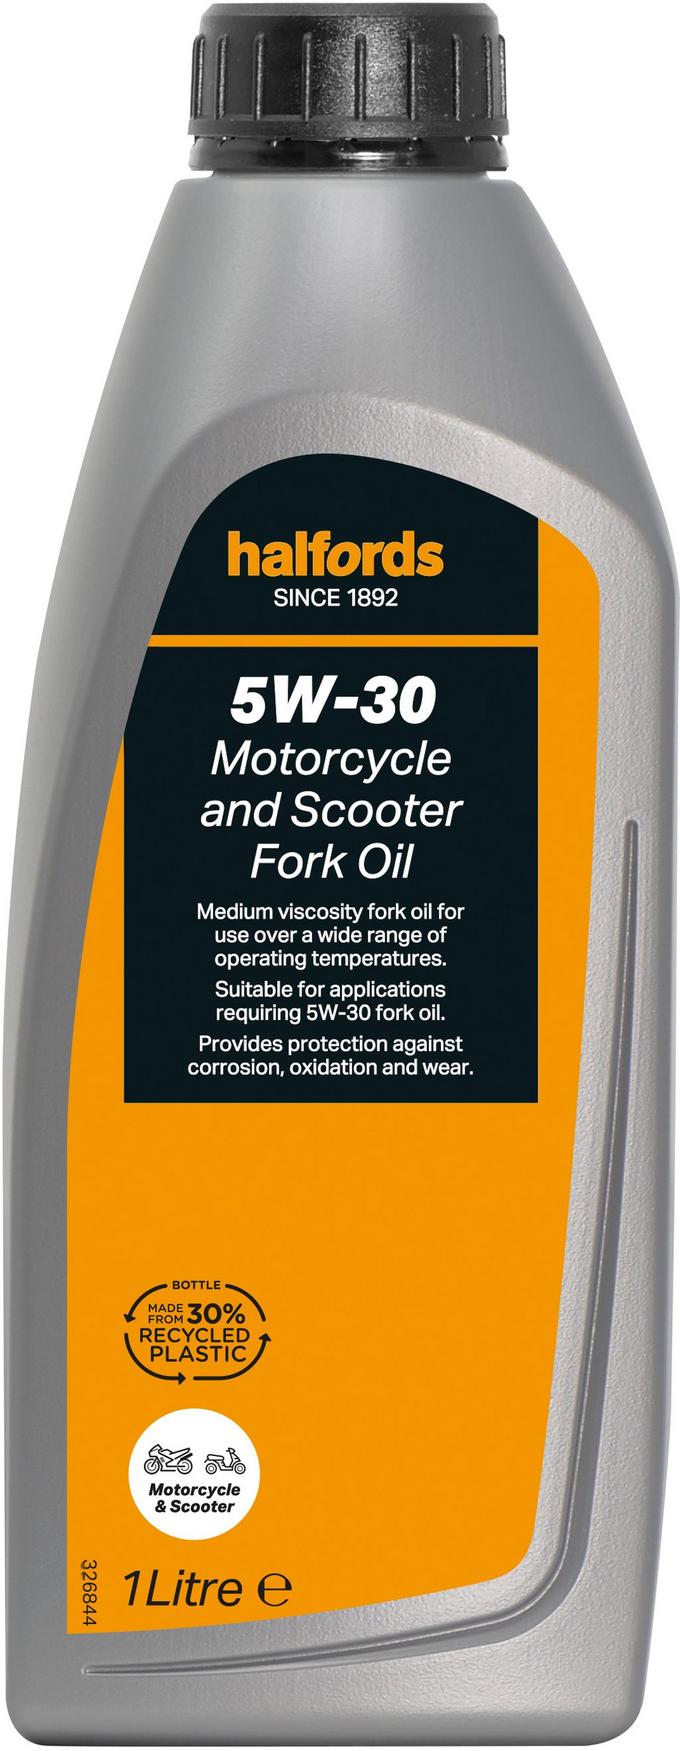 https://cdn.media.halfords.com/i/washford/724393/Halfords-Motorcycle-Fork-Oil-5W30-1L?fmt=auto&qlt=default&$sfcc_tile$&w=680